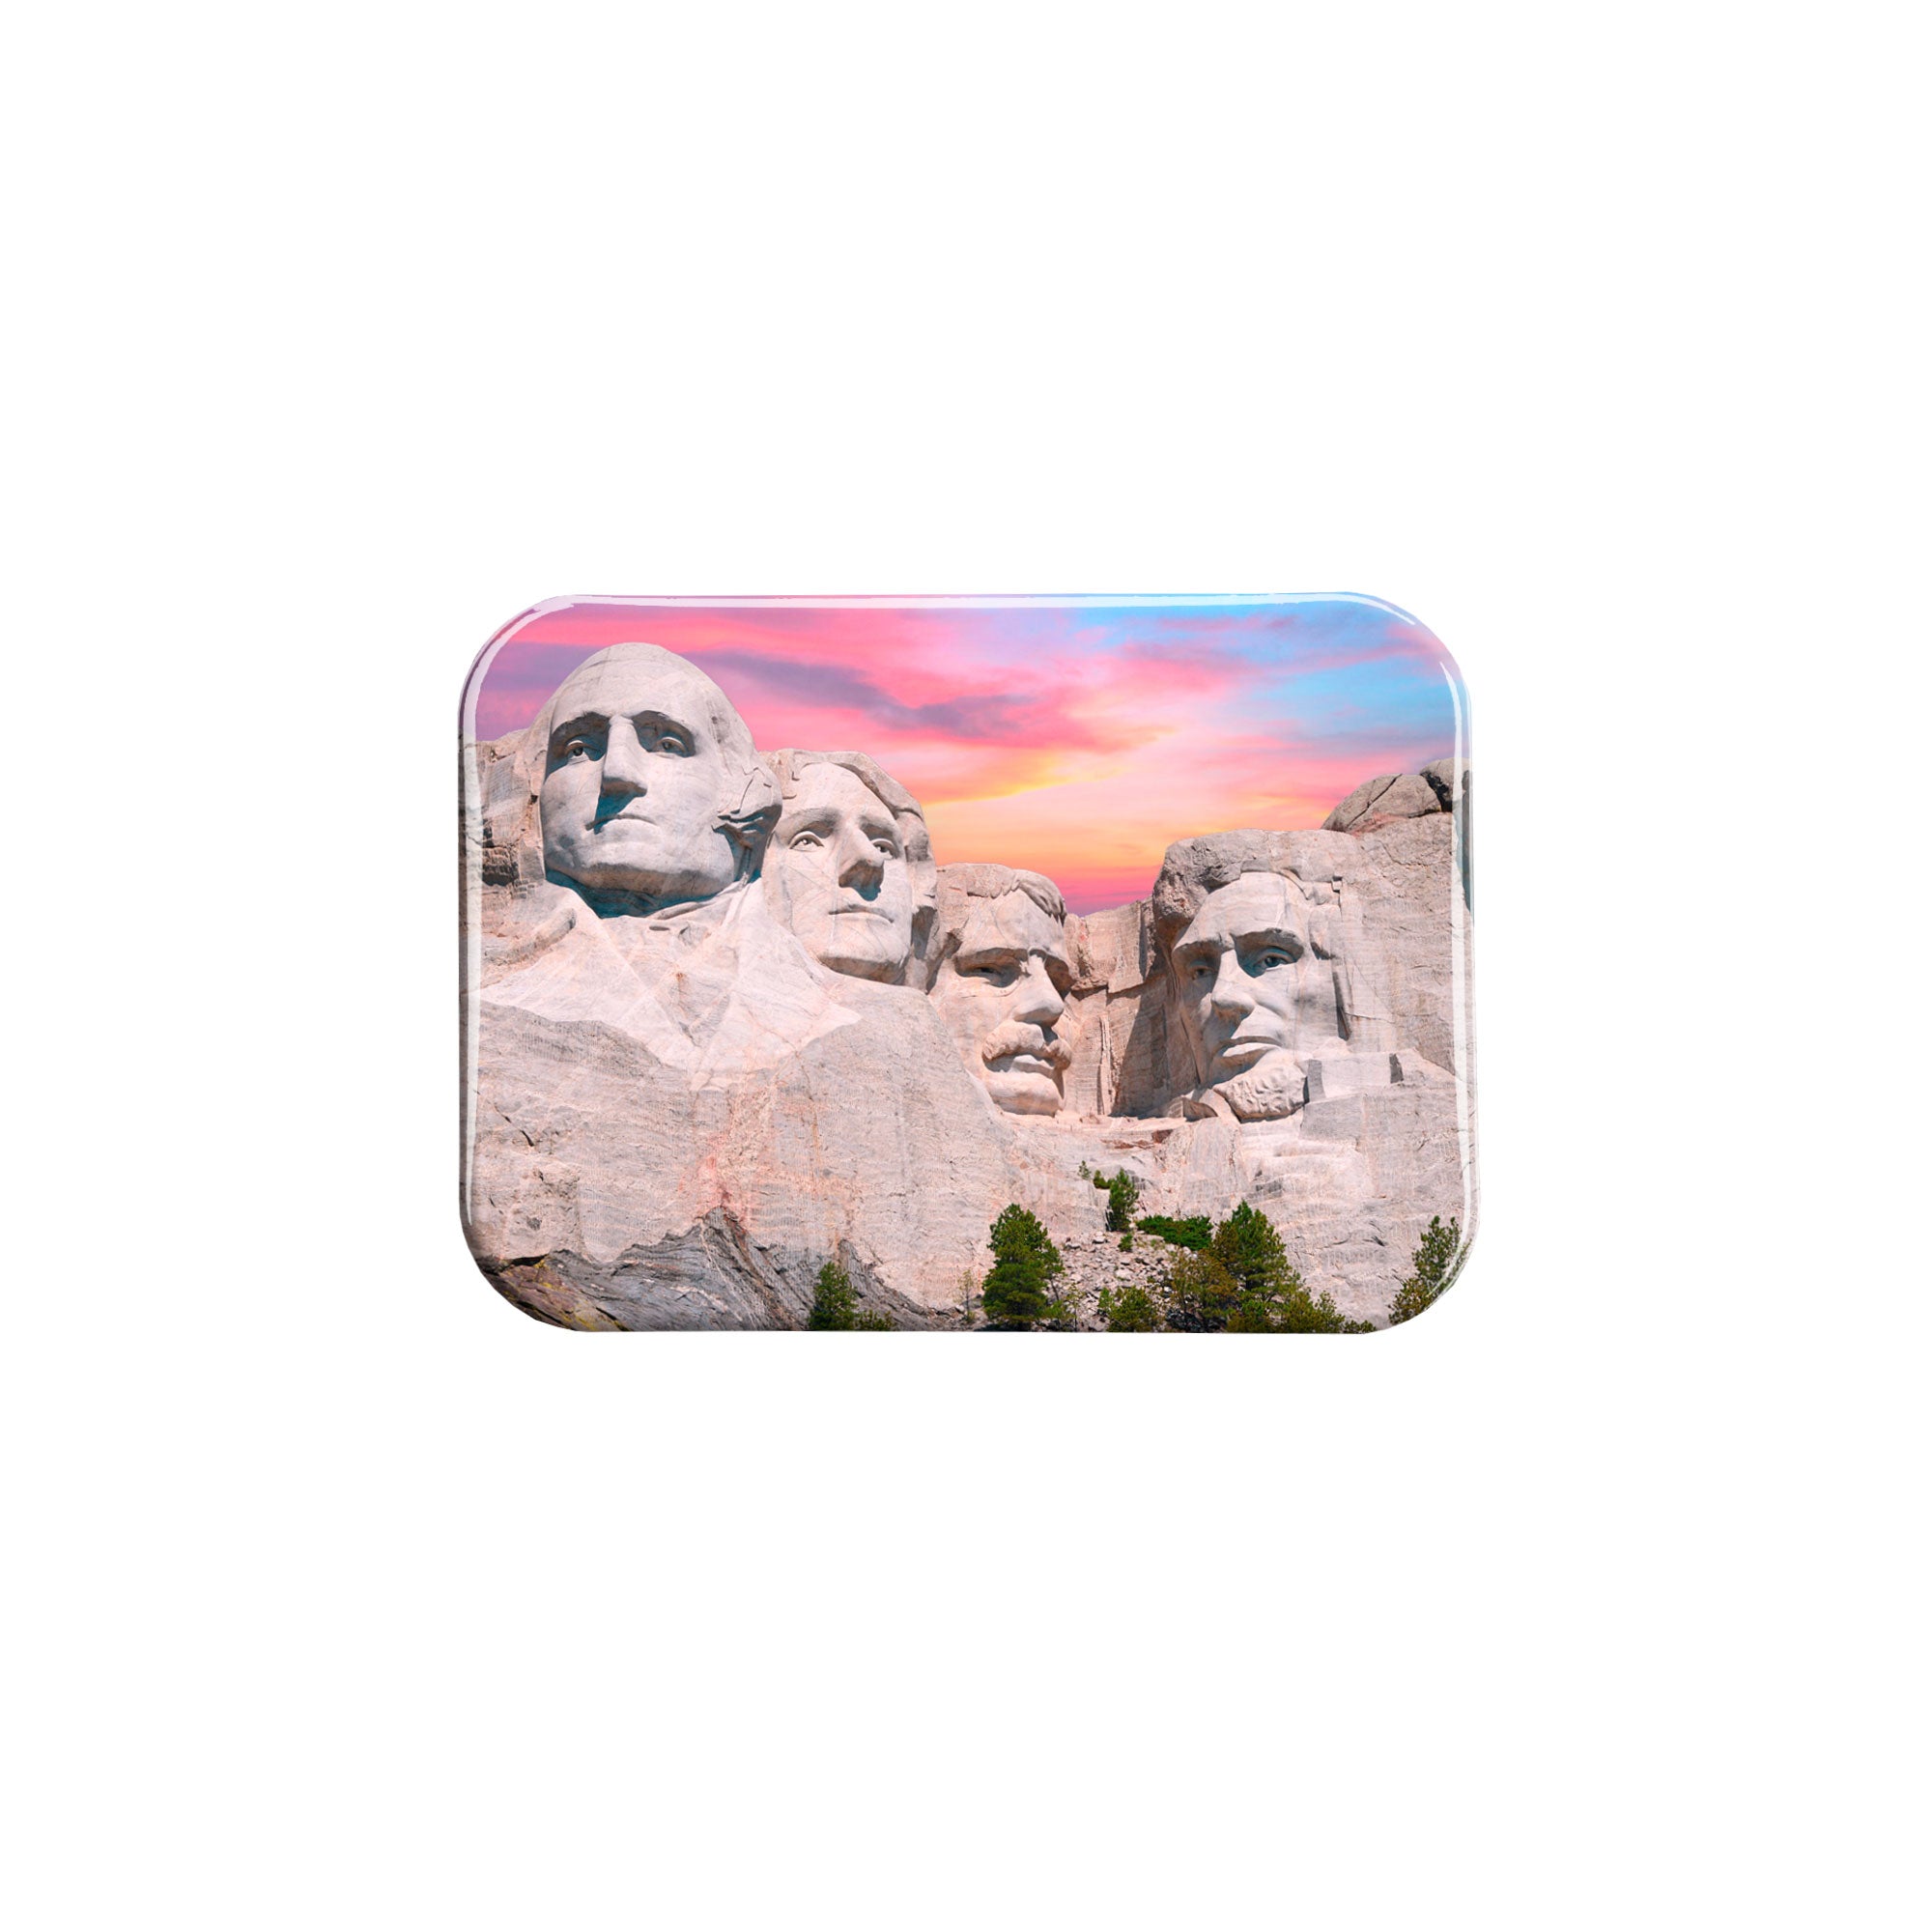 "Mount Rushmore at Sunset" - 2.5" X 3.5" Rectangle Fridge Magnets